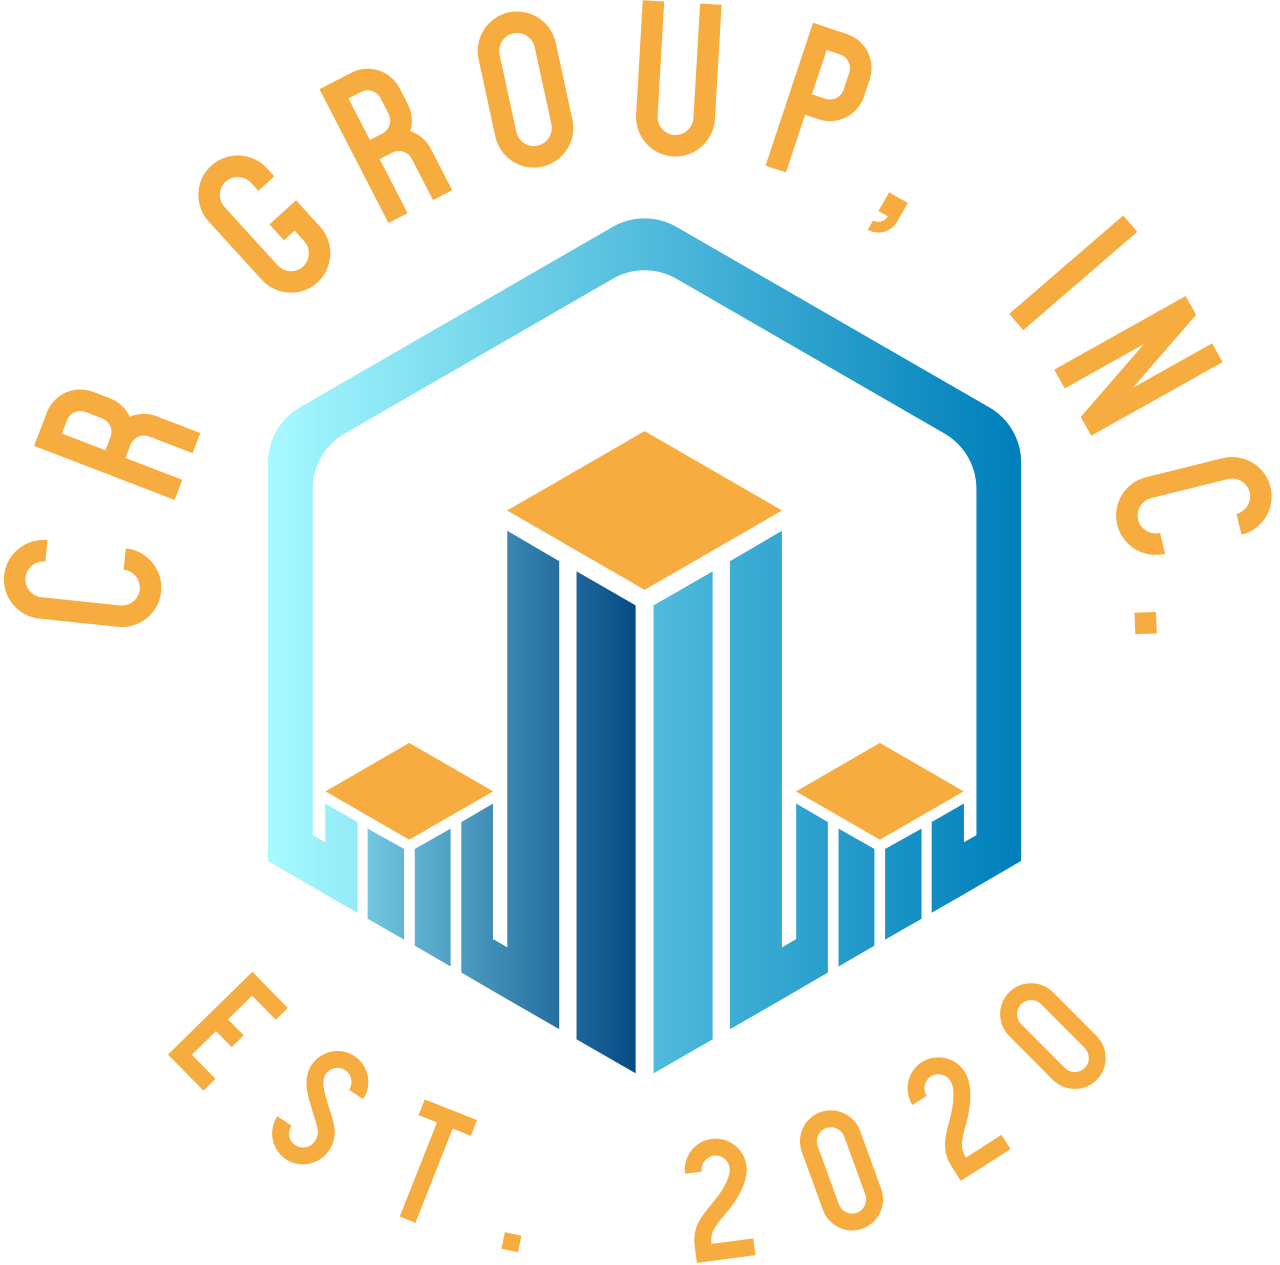 CR Group, Inc.'s web page